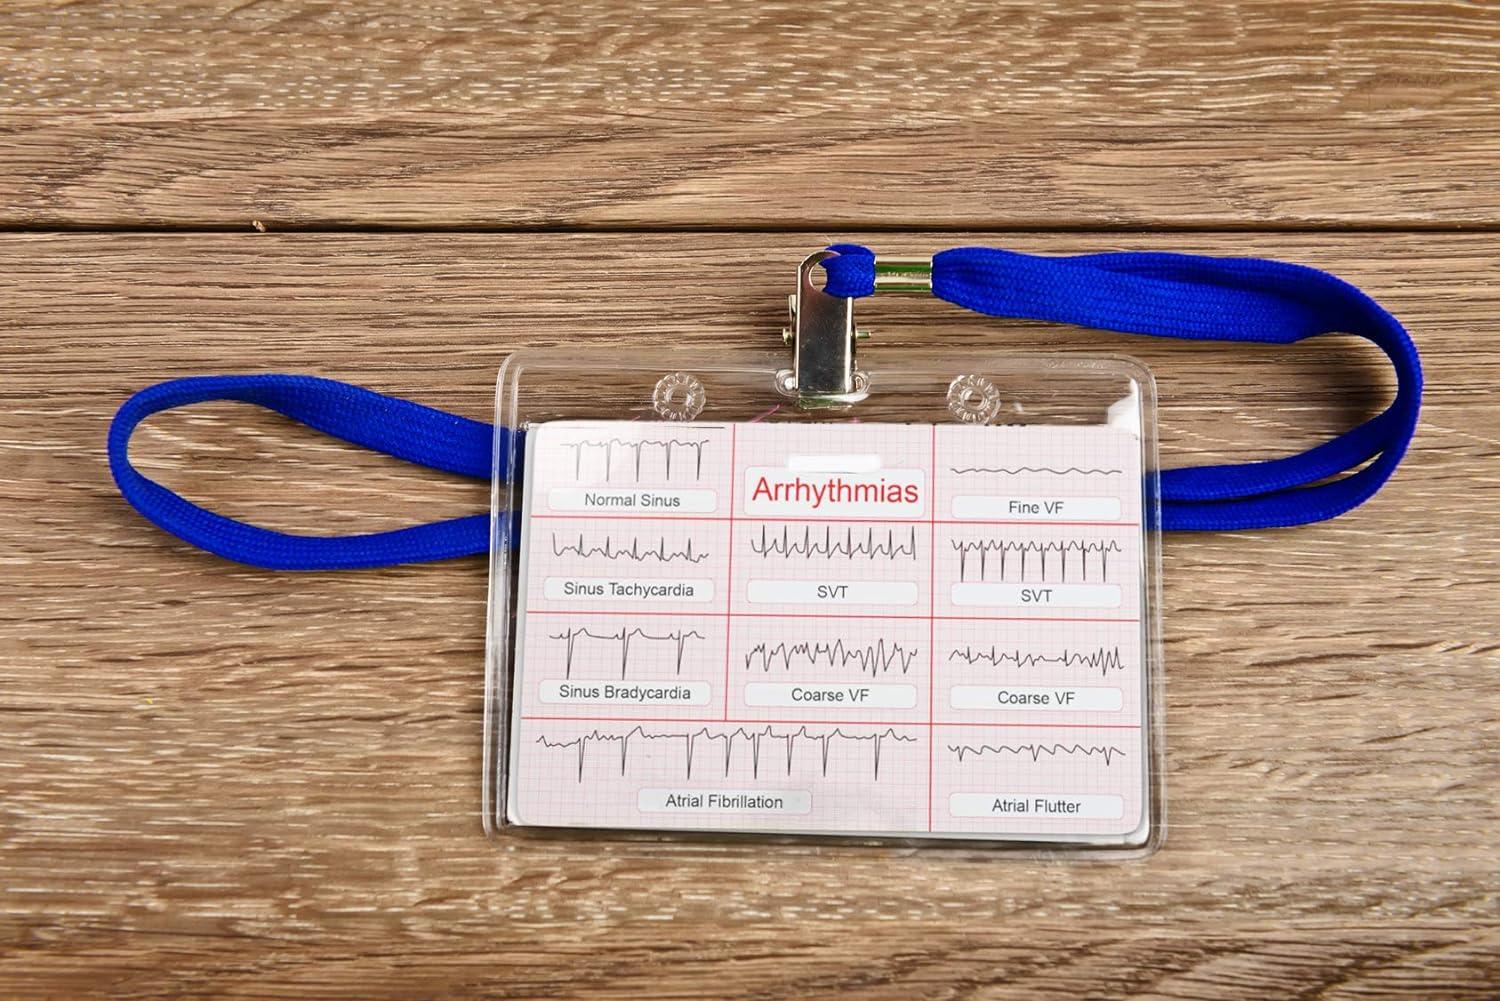 EKG Calipers Plus ECG Rhythm Interpretation Badge Cards. The